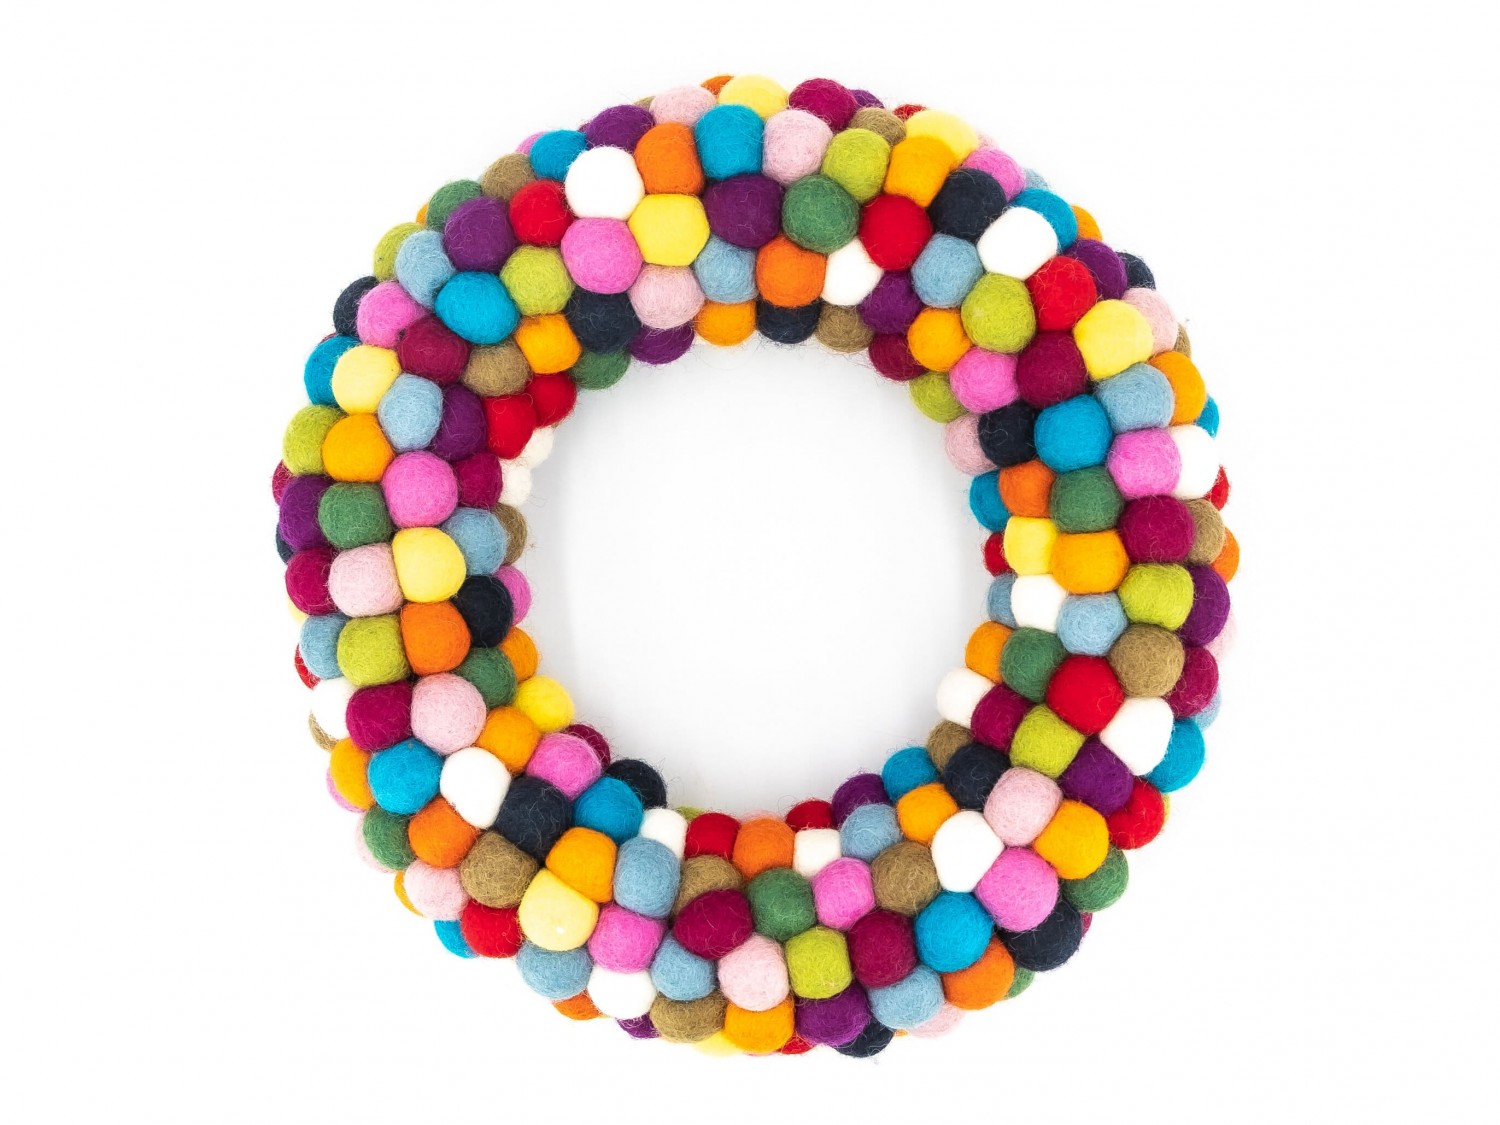 Handmade multicolored felt ball wreath